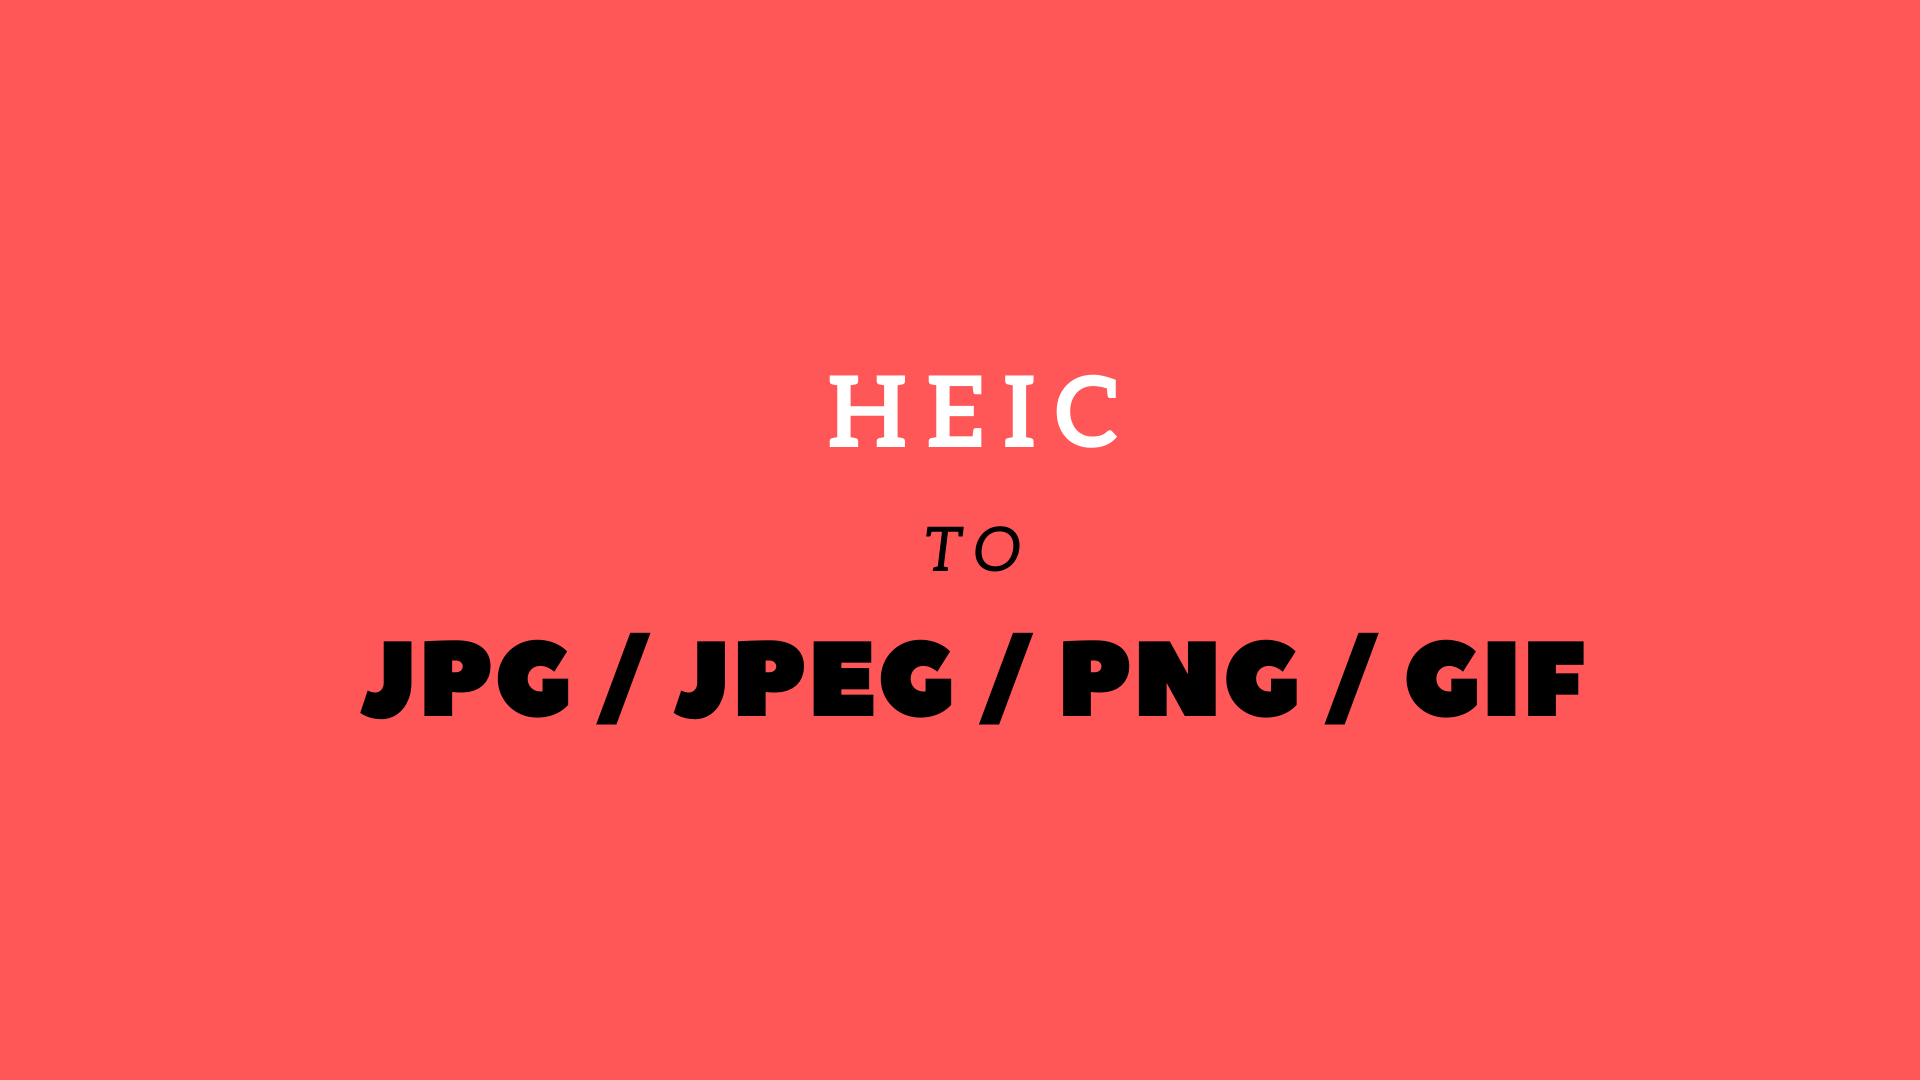 HEIC Image to JPG / JPEG / PNG / GIF Encoding format converter tool